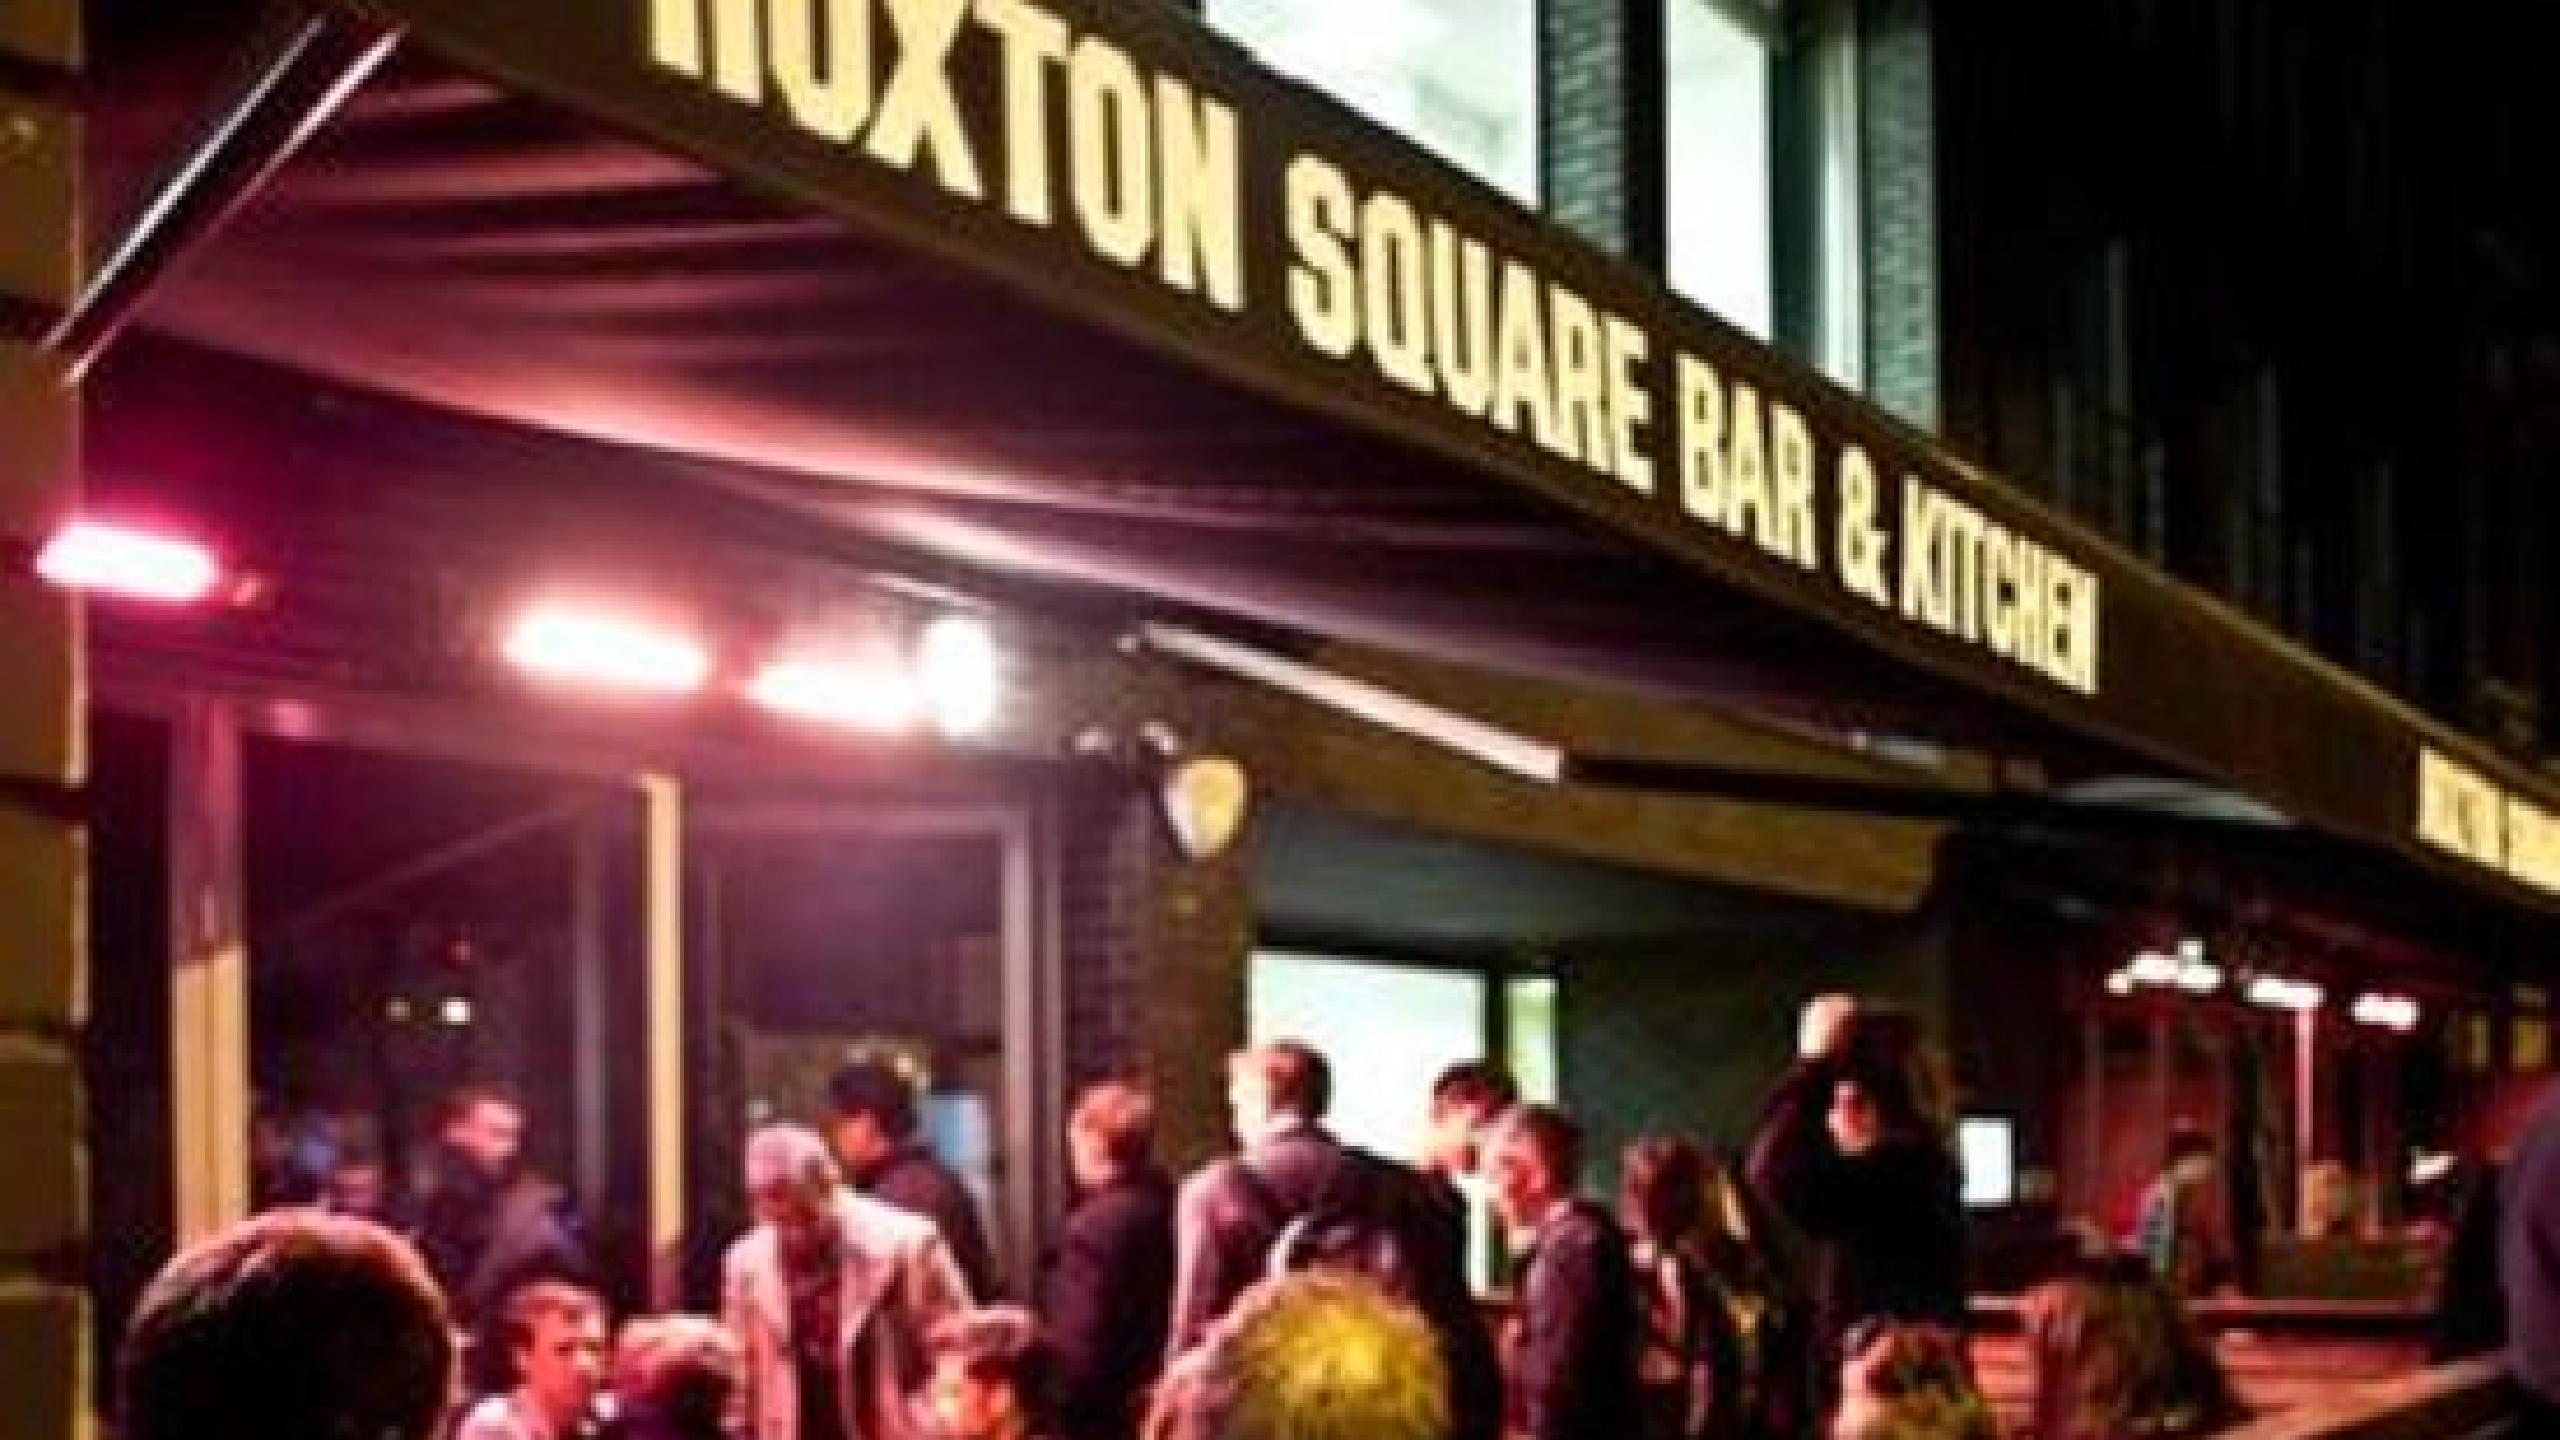 hoxton square bar and kitchen postcode